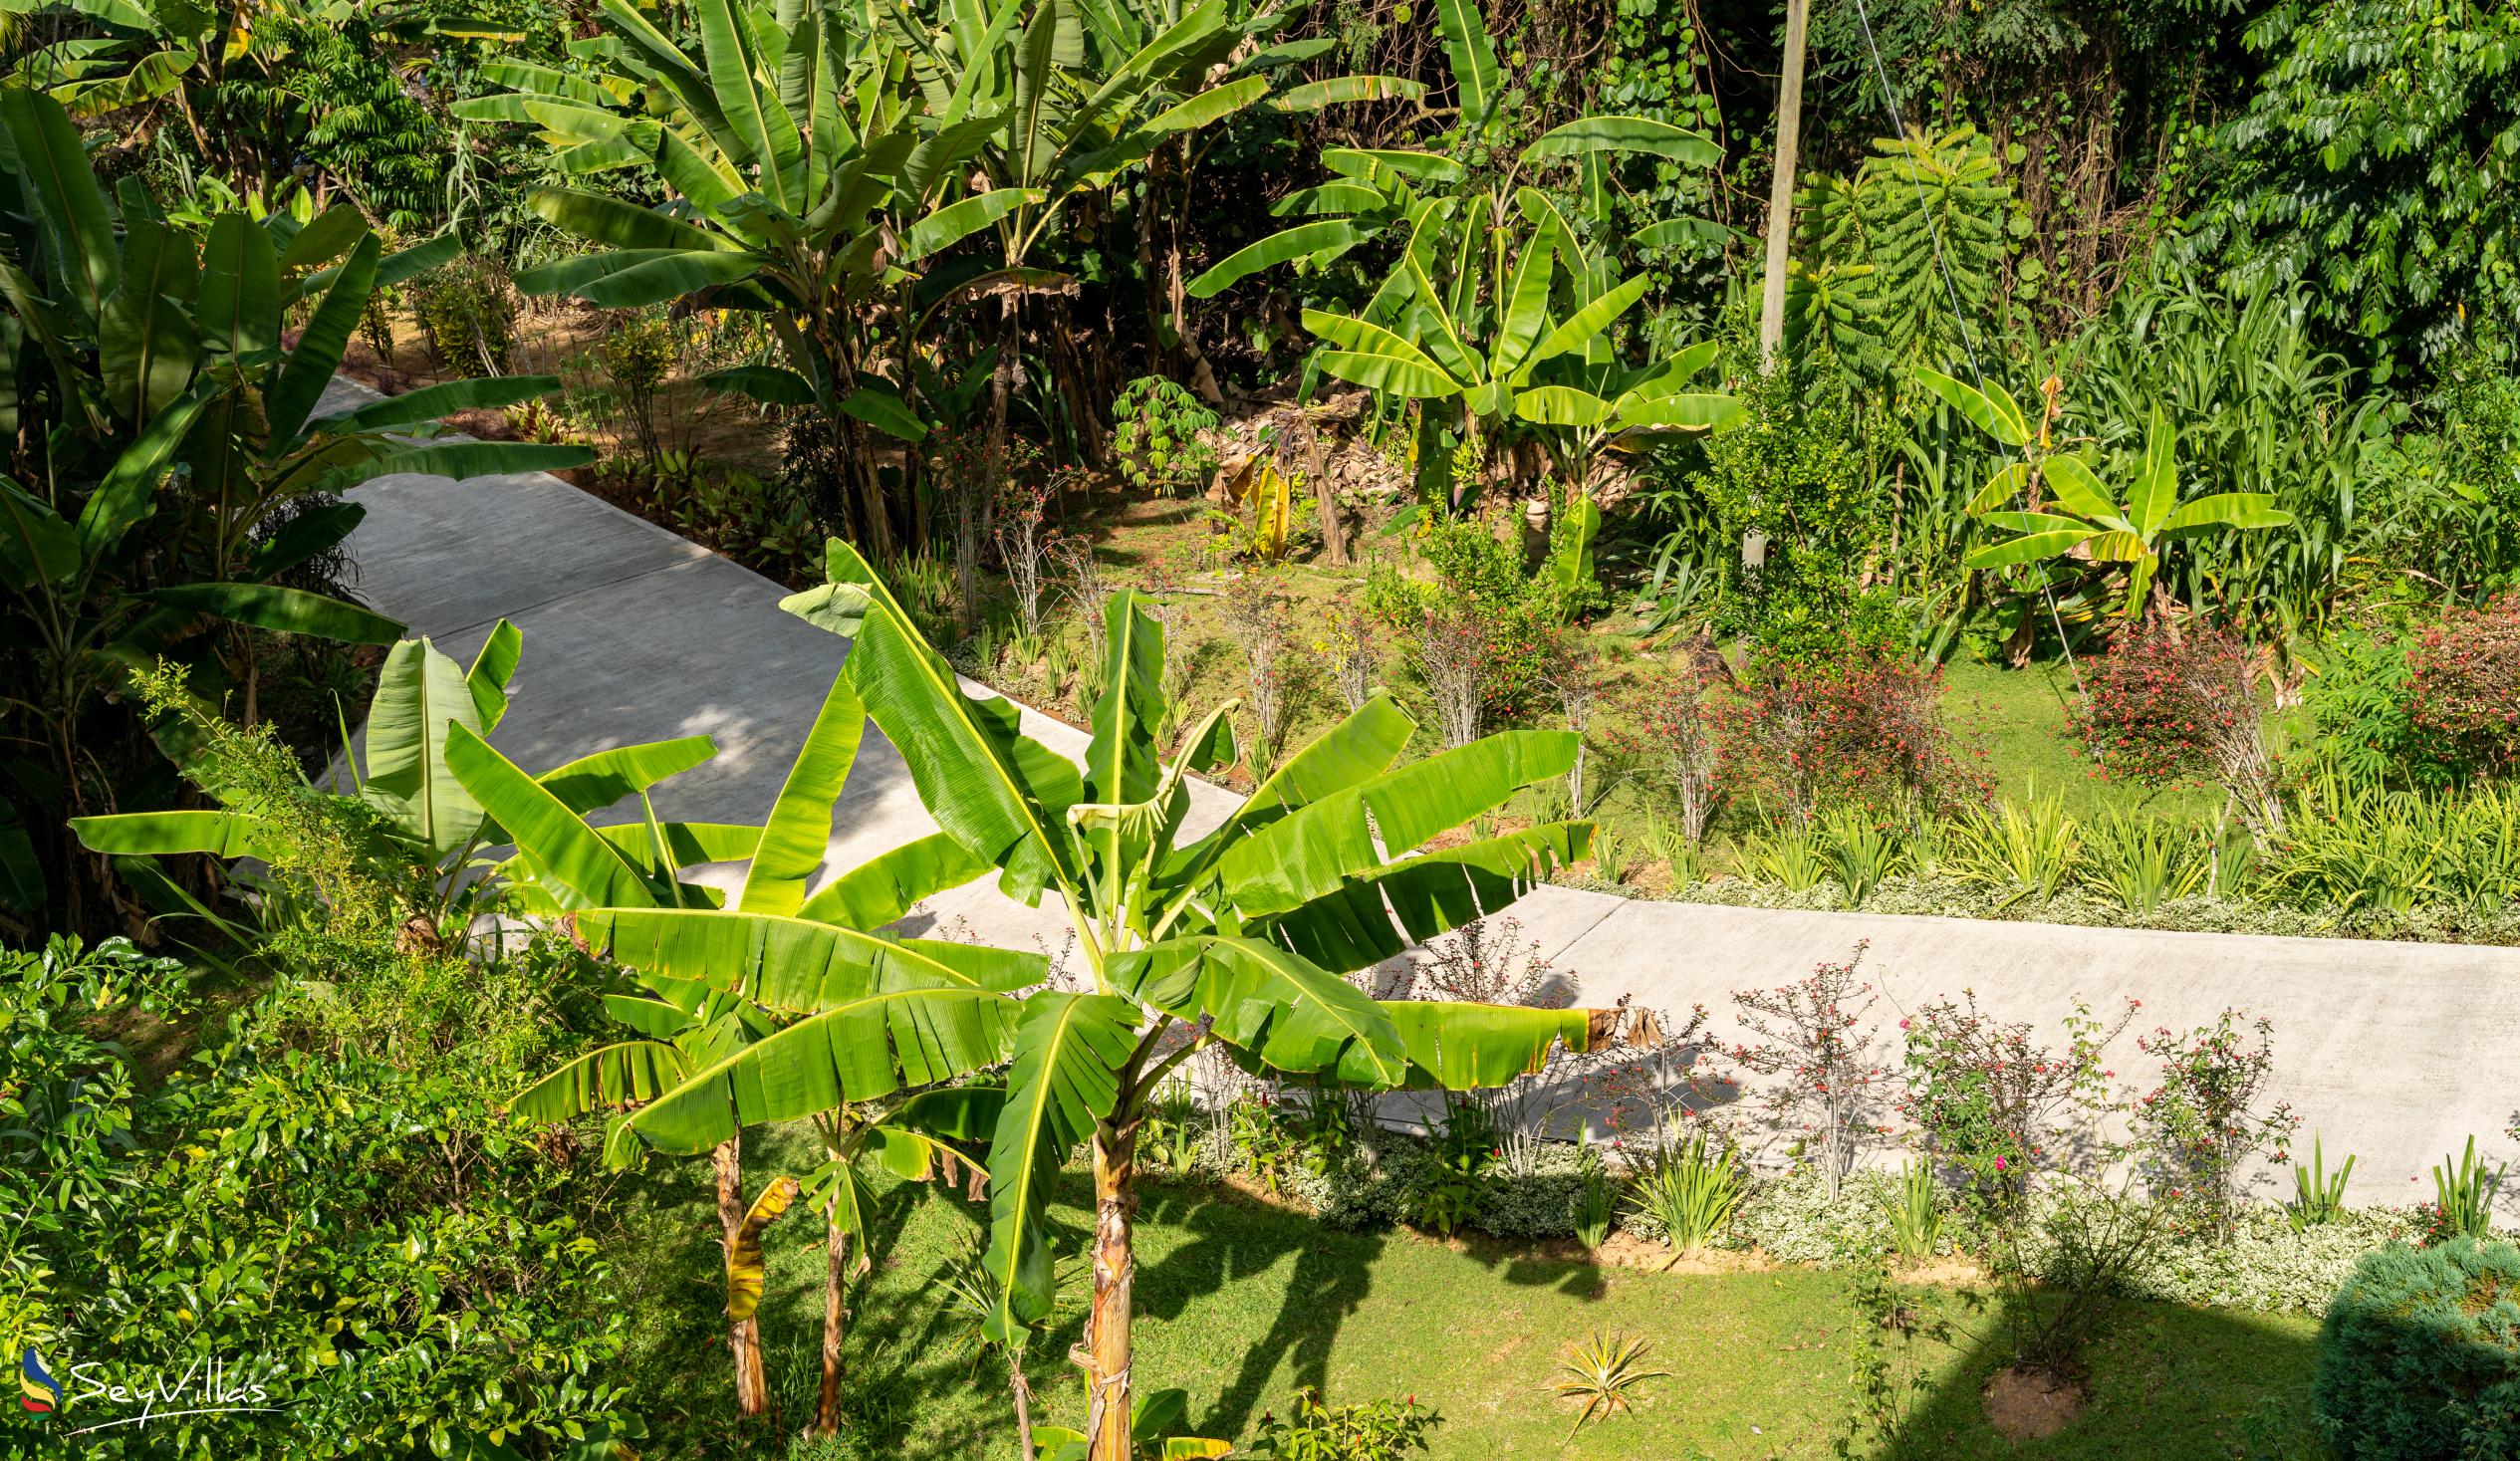 Photo 54: Kanasuk Self Catering Apartments - Outdoor area - Mahé (Seychelles)